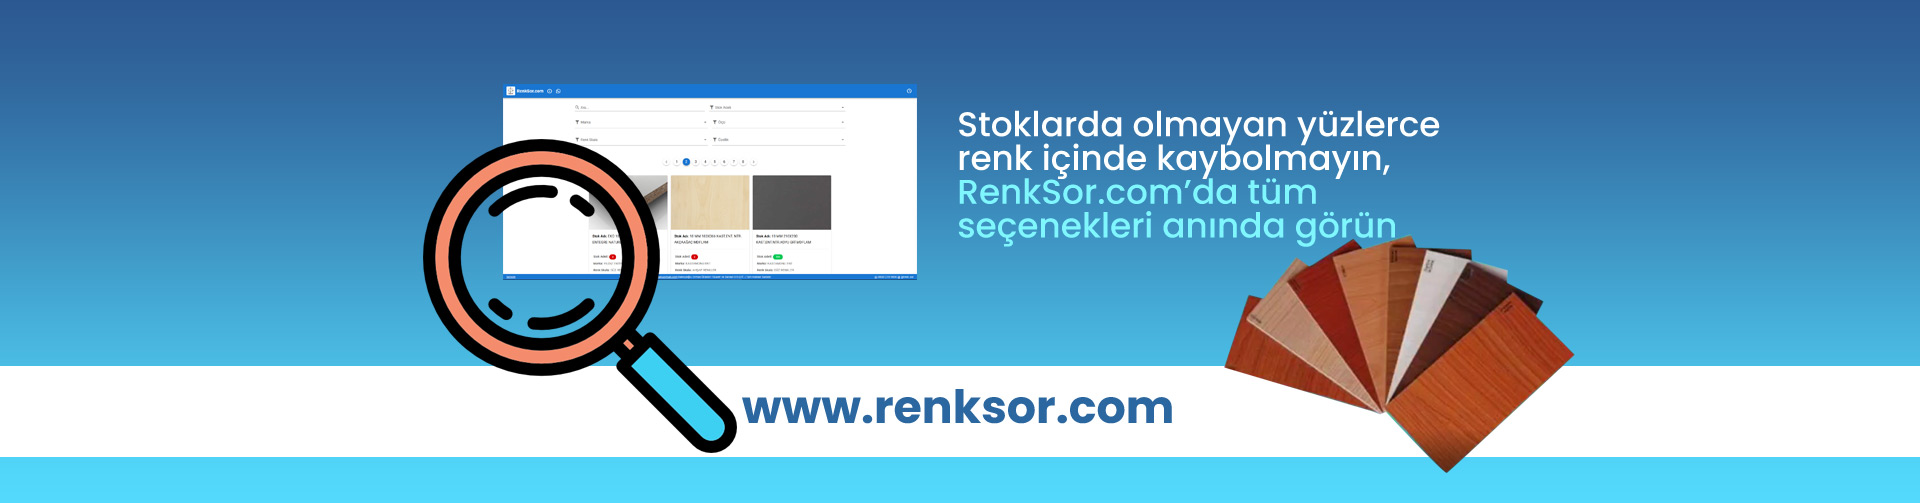 www.renksor.com